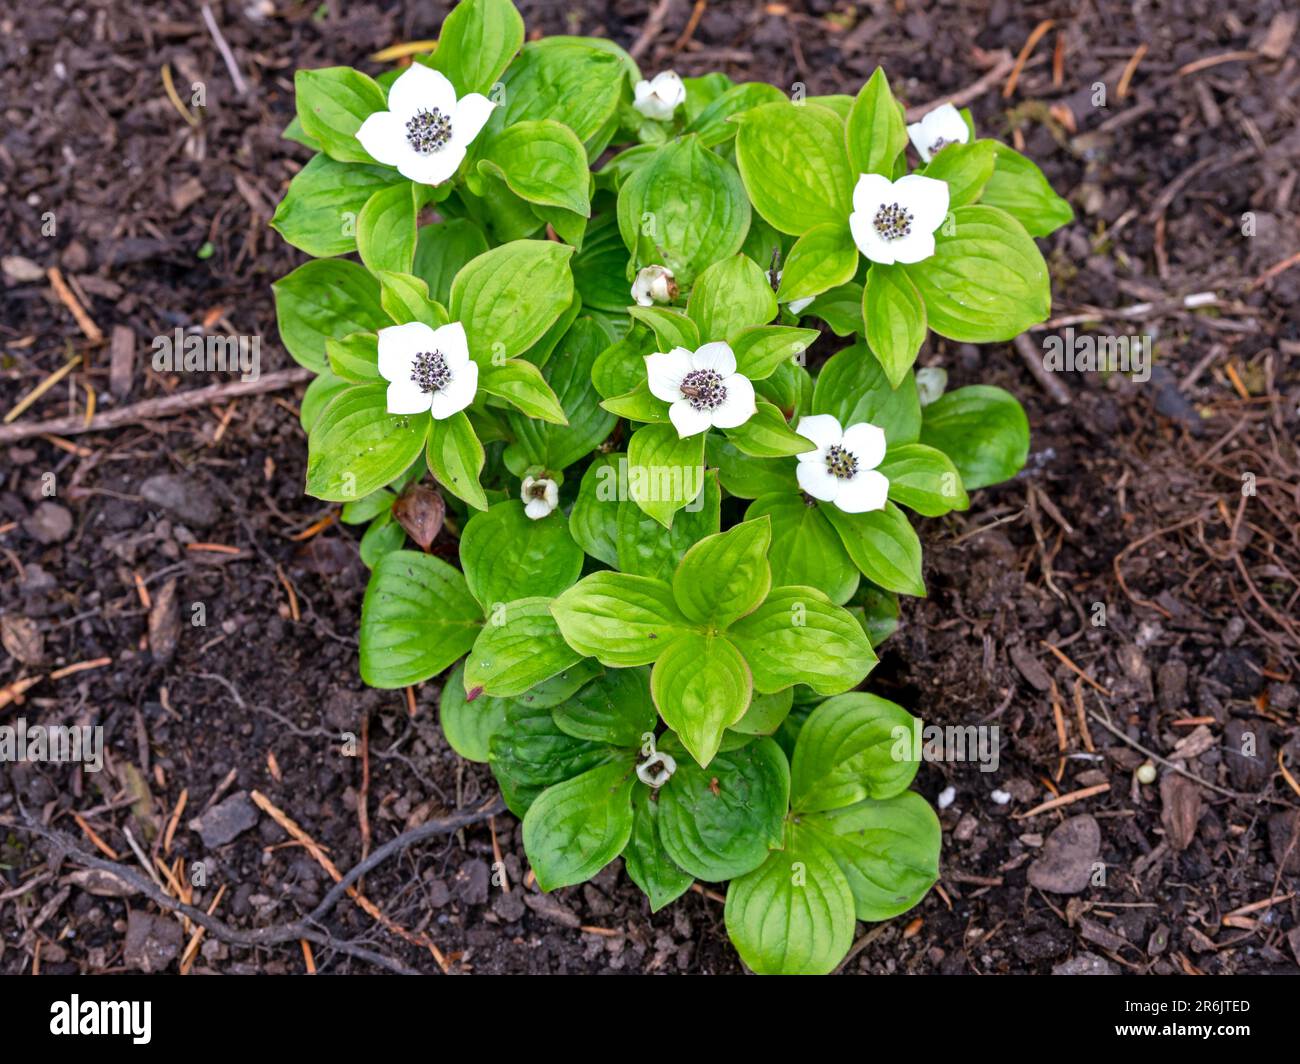 Dwarf cornel Cornus suecica plant with white flowers Stock Photo